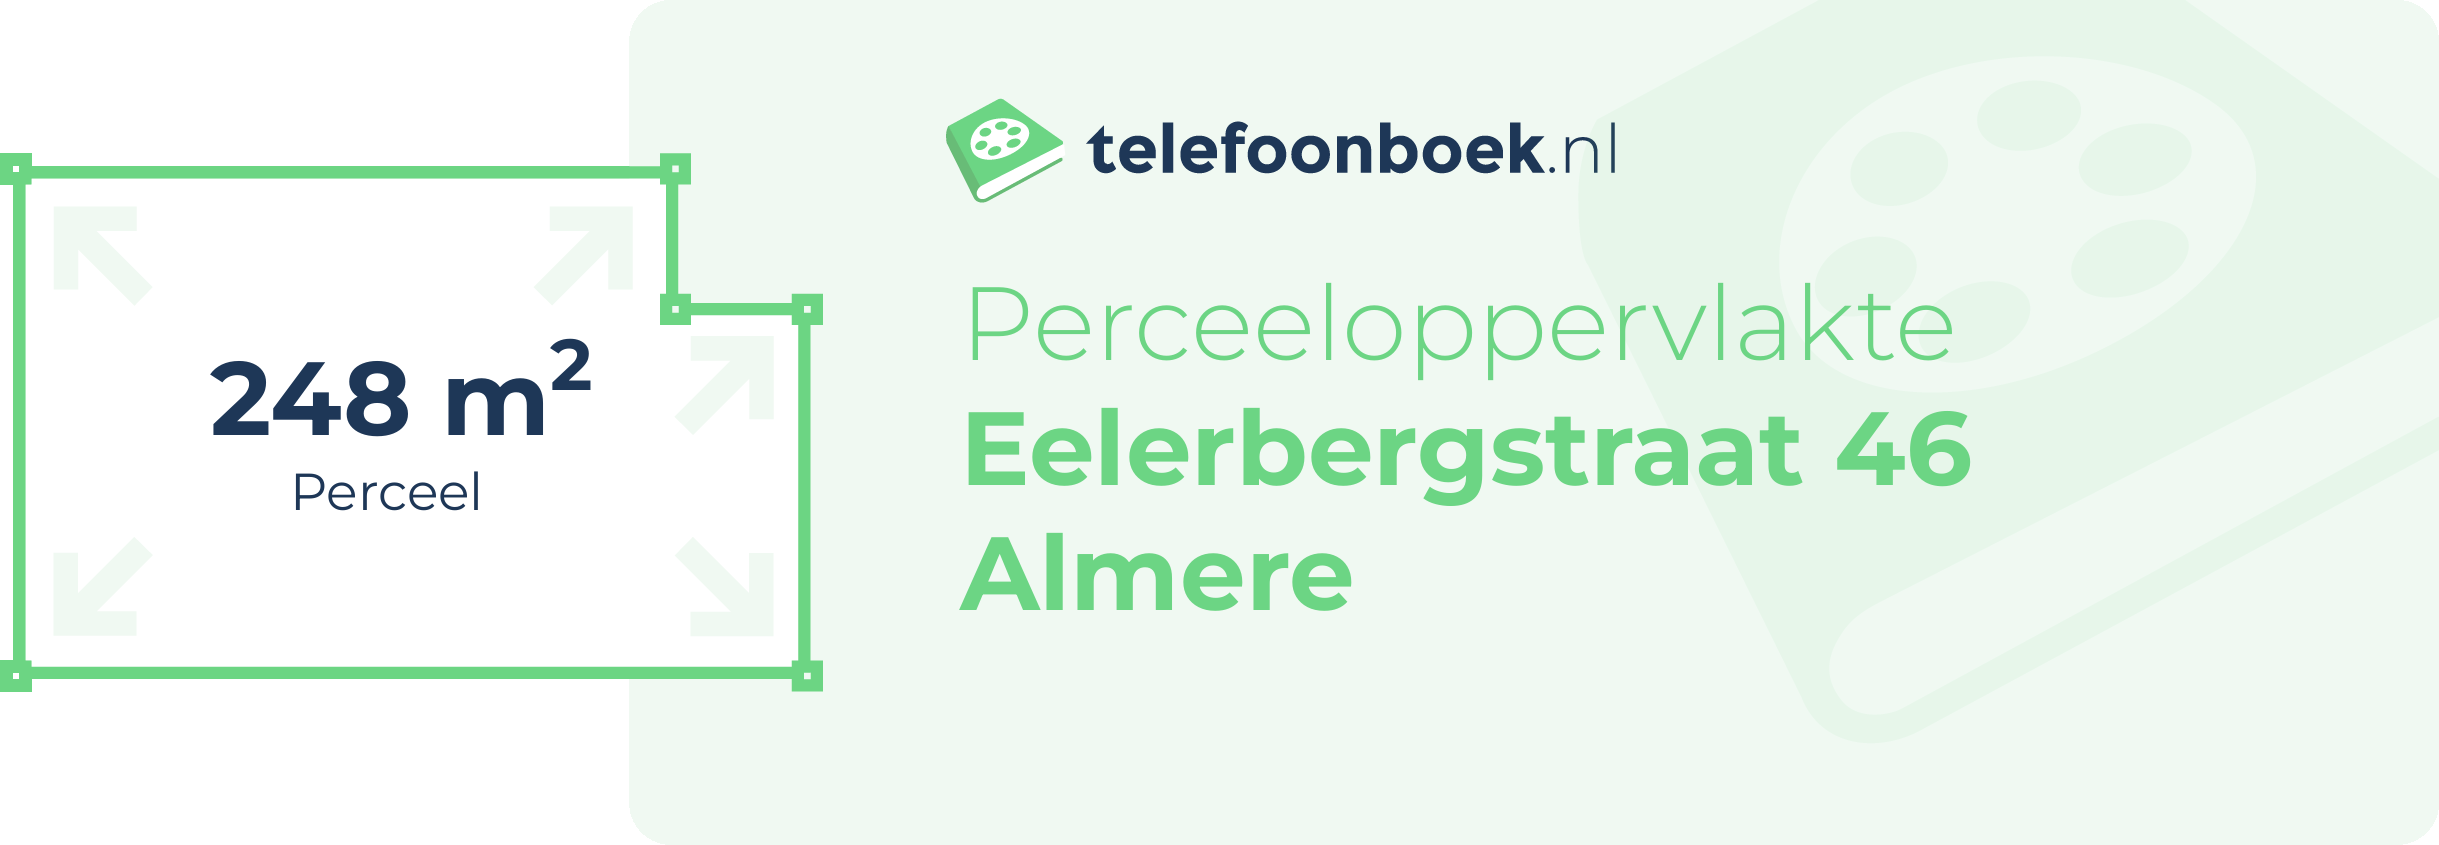 Perceeloppervlakte Eelerbergstraat 46 Almere